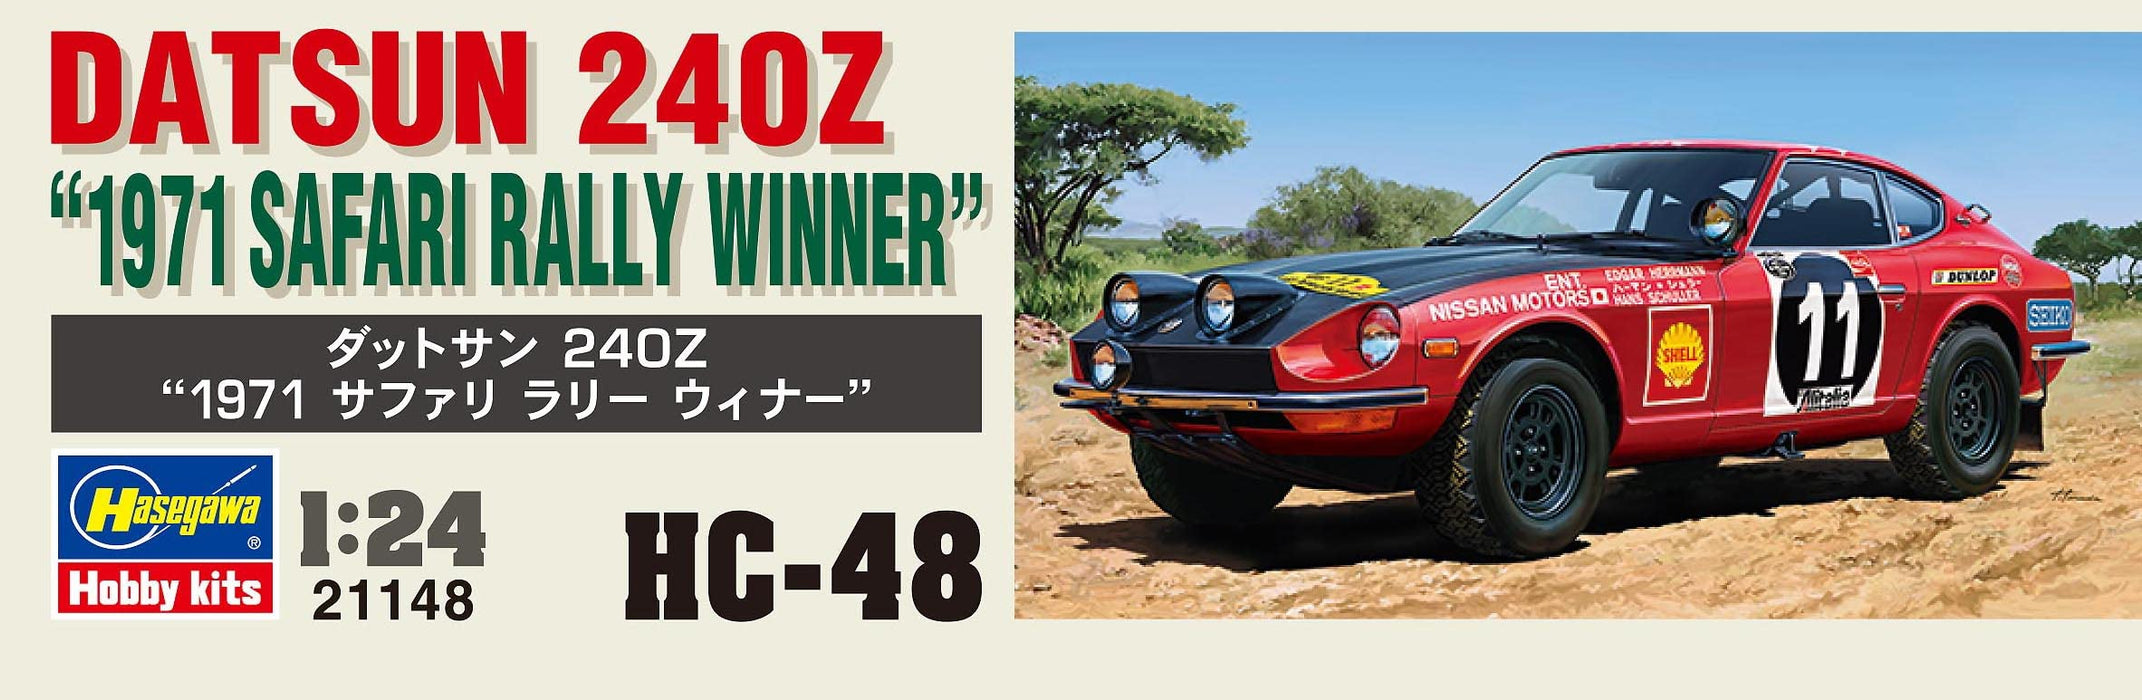 HASEGAWA 1/24 Datsun Fairlady 240Z 1971 Safari Rally Winner Plastikmodell